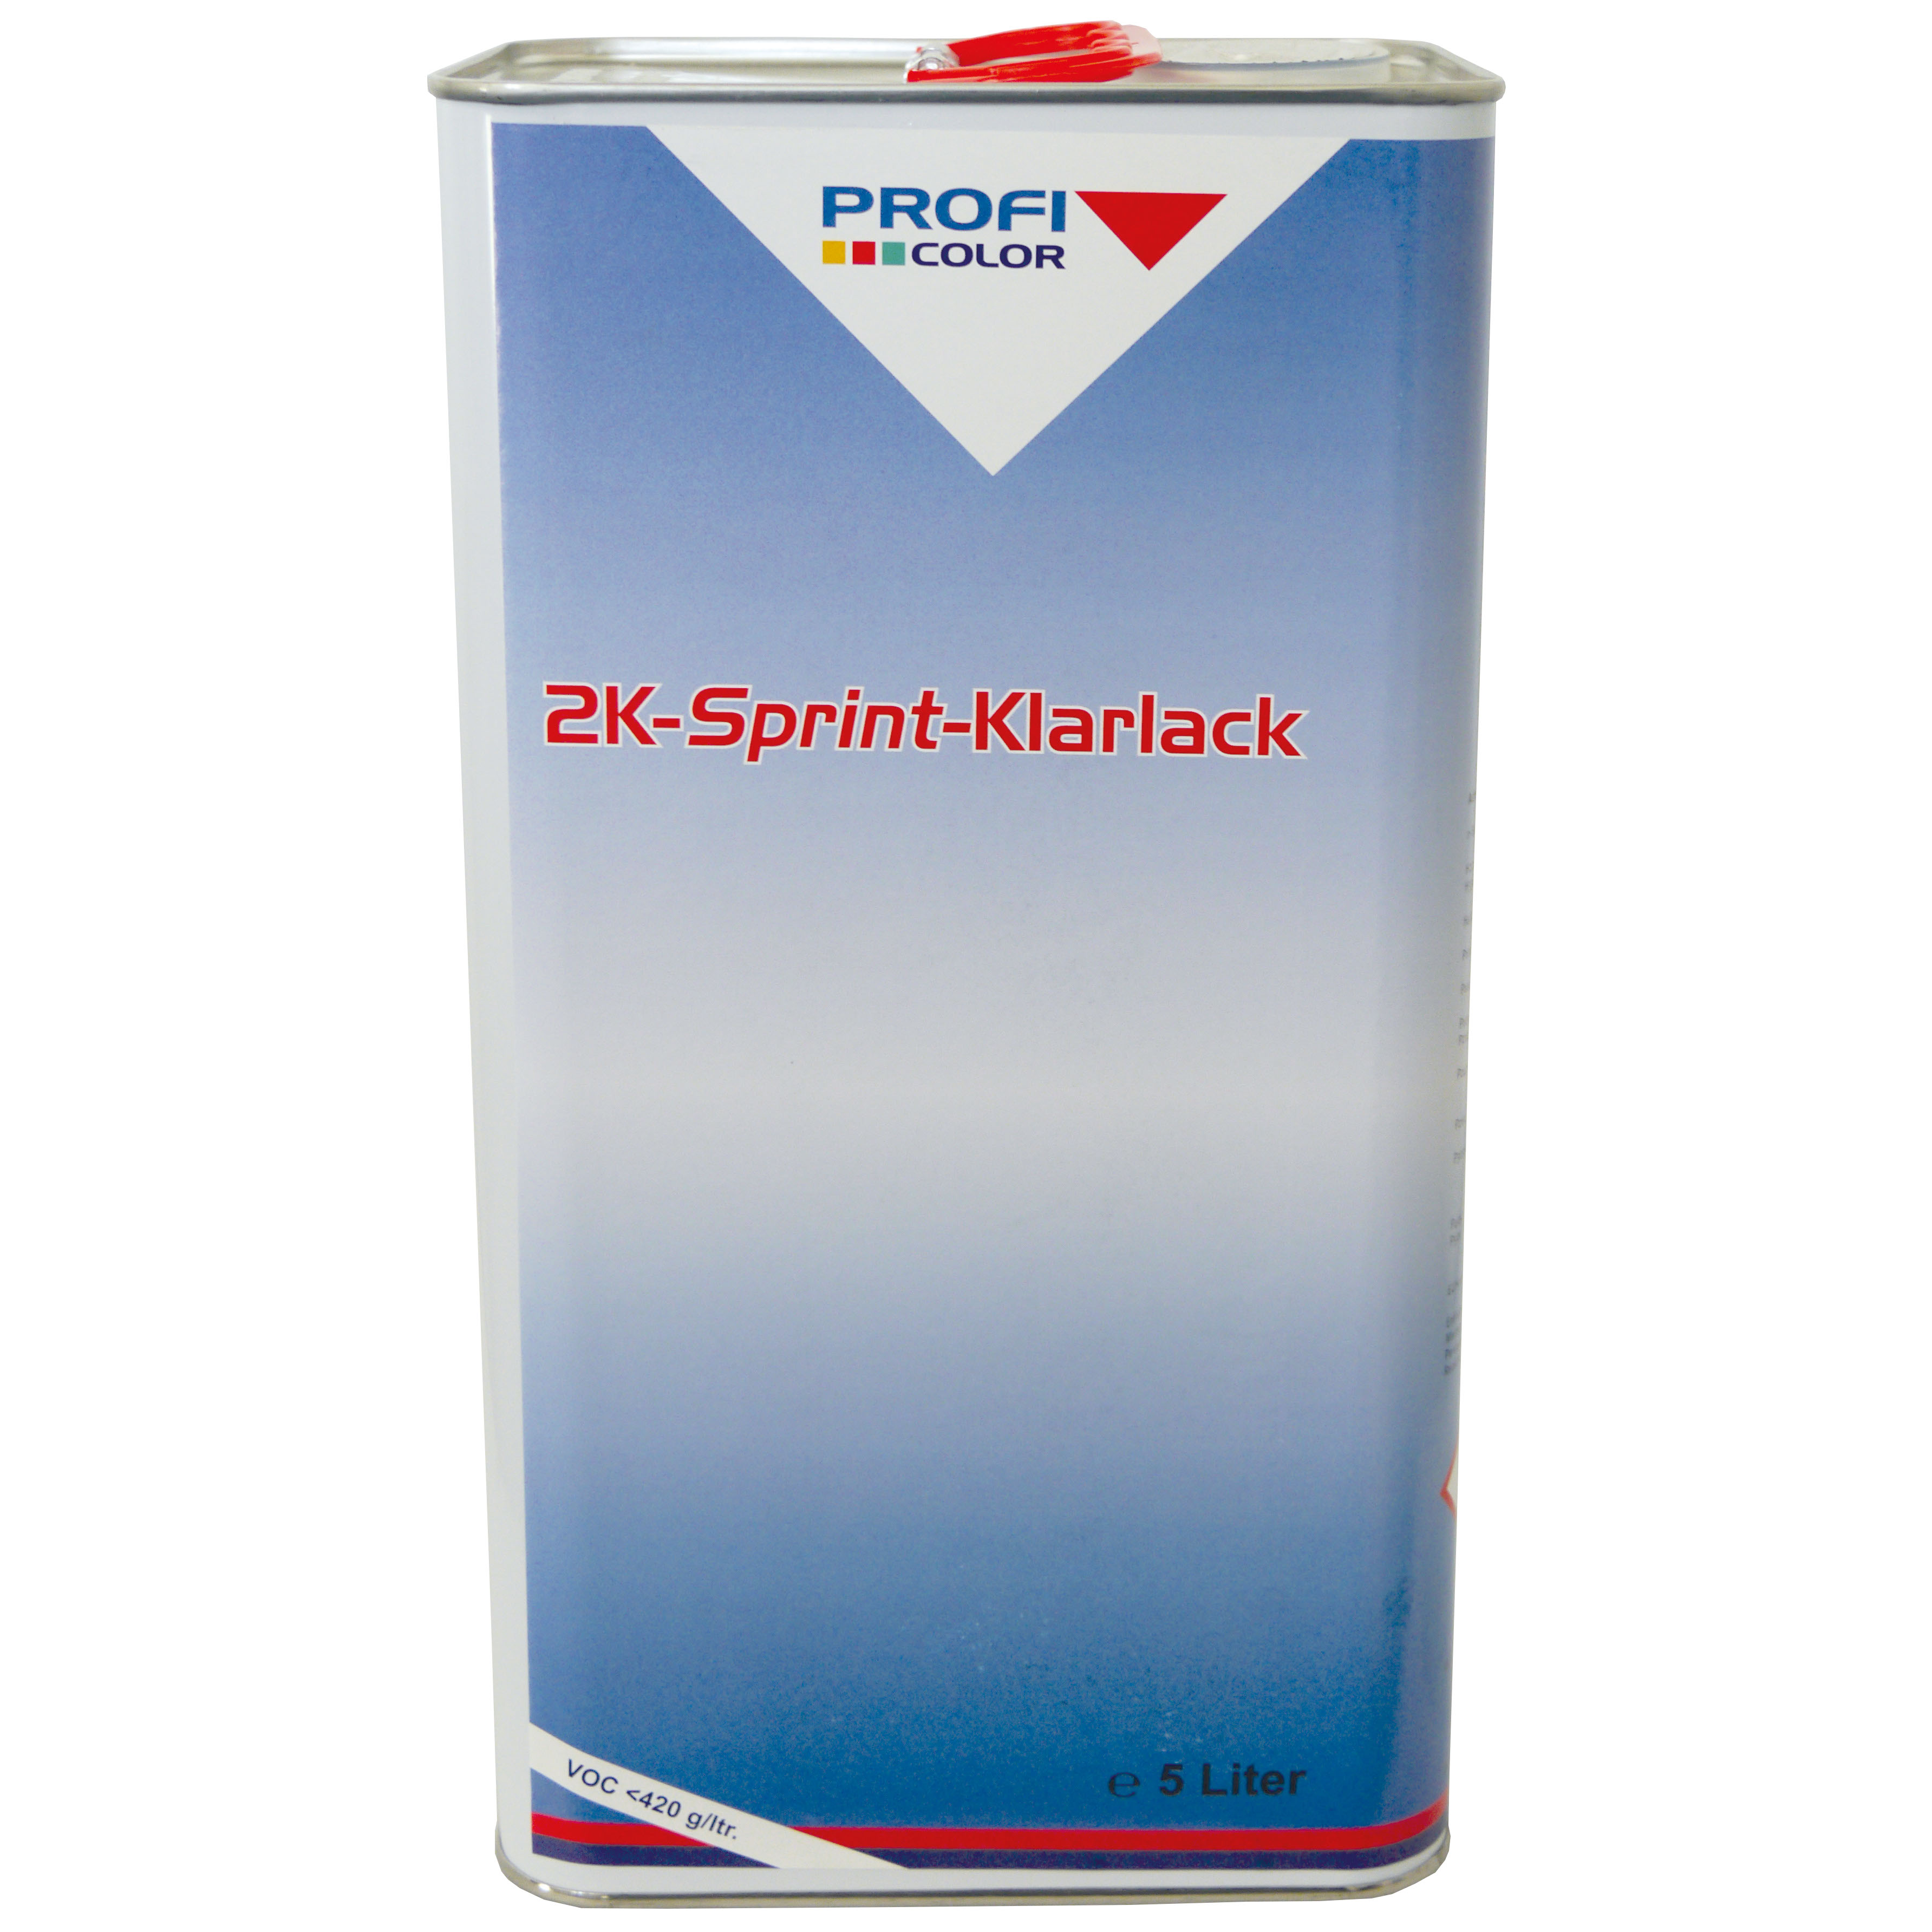 Profi Color 2K-Sprint-Klarlack, 5 l